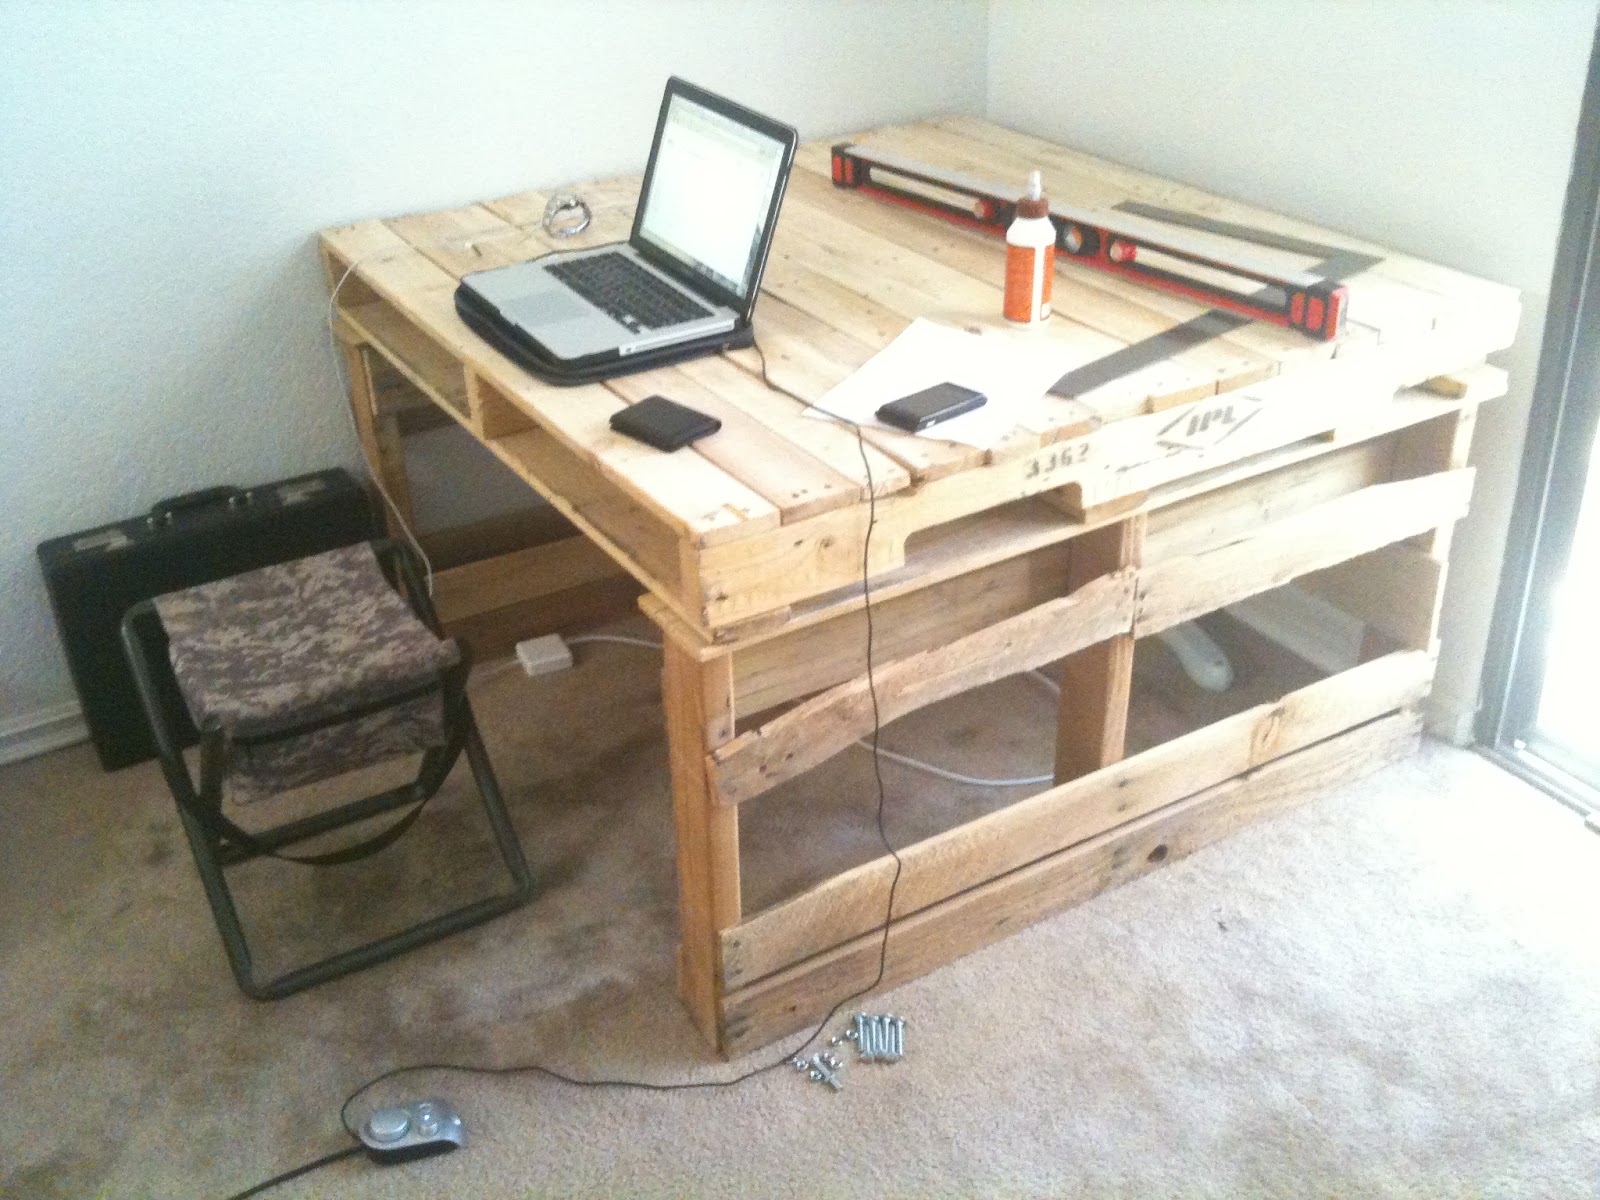 Making Pallet Furniture | Technoloid